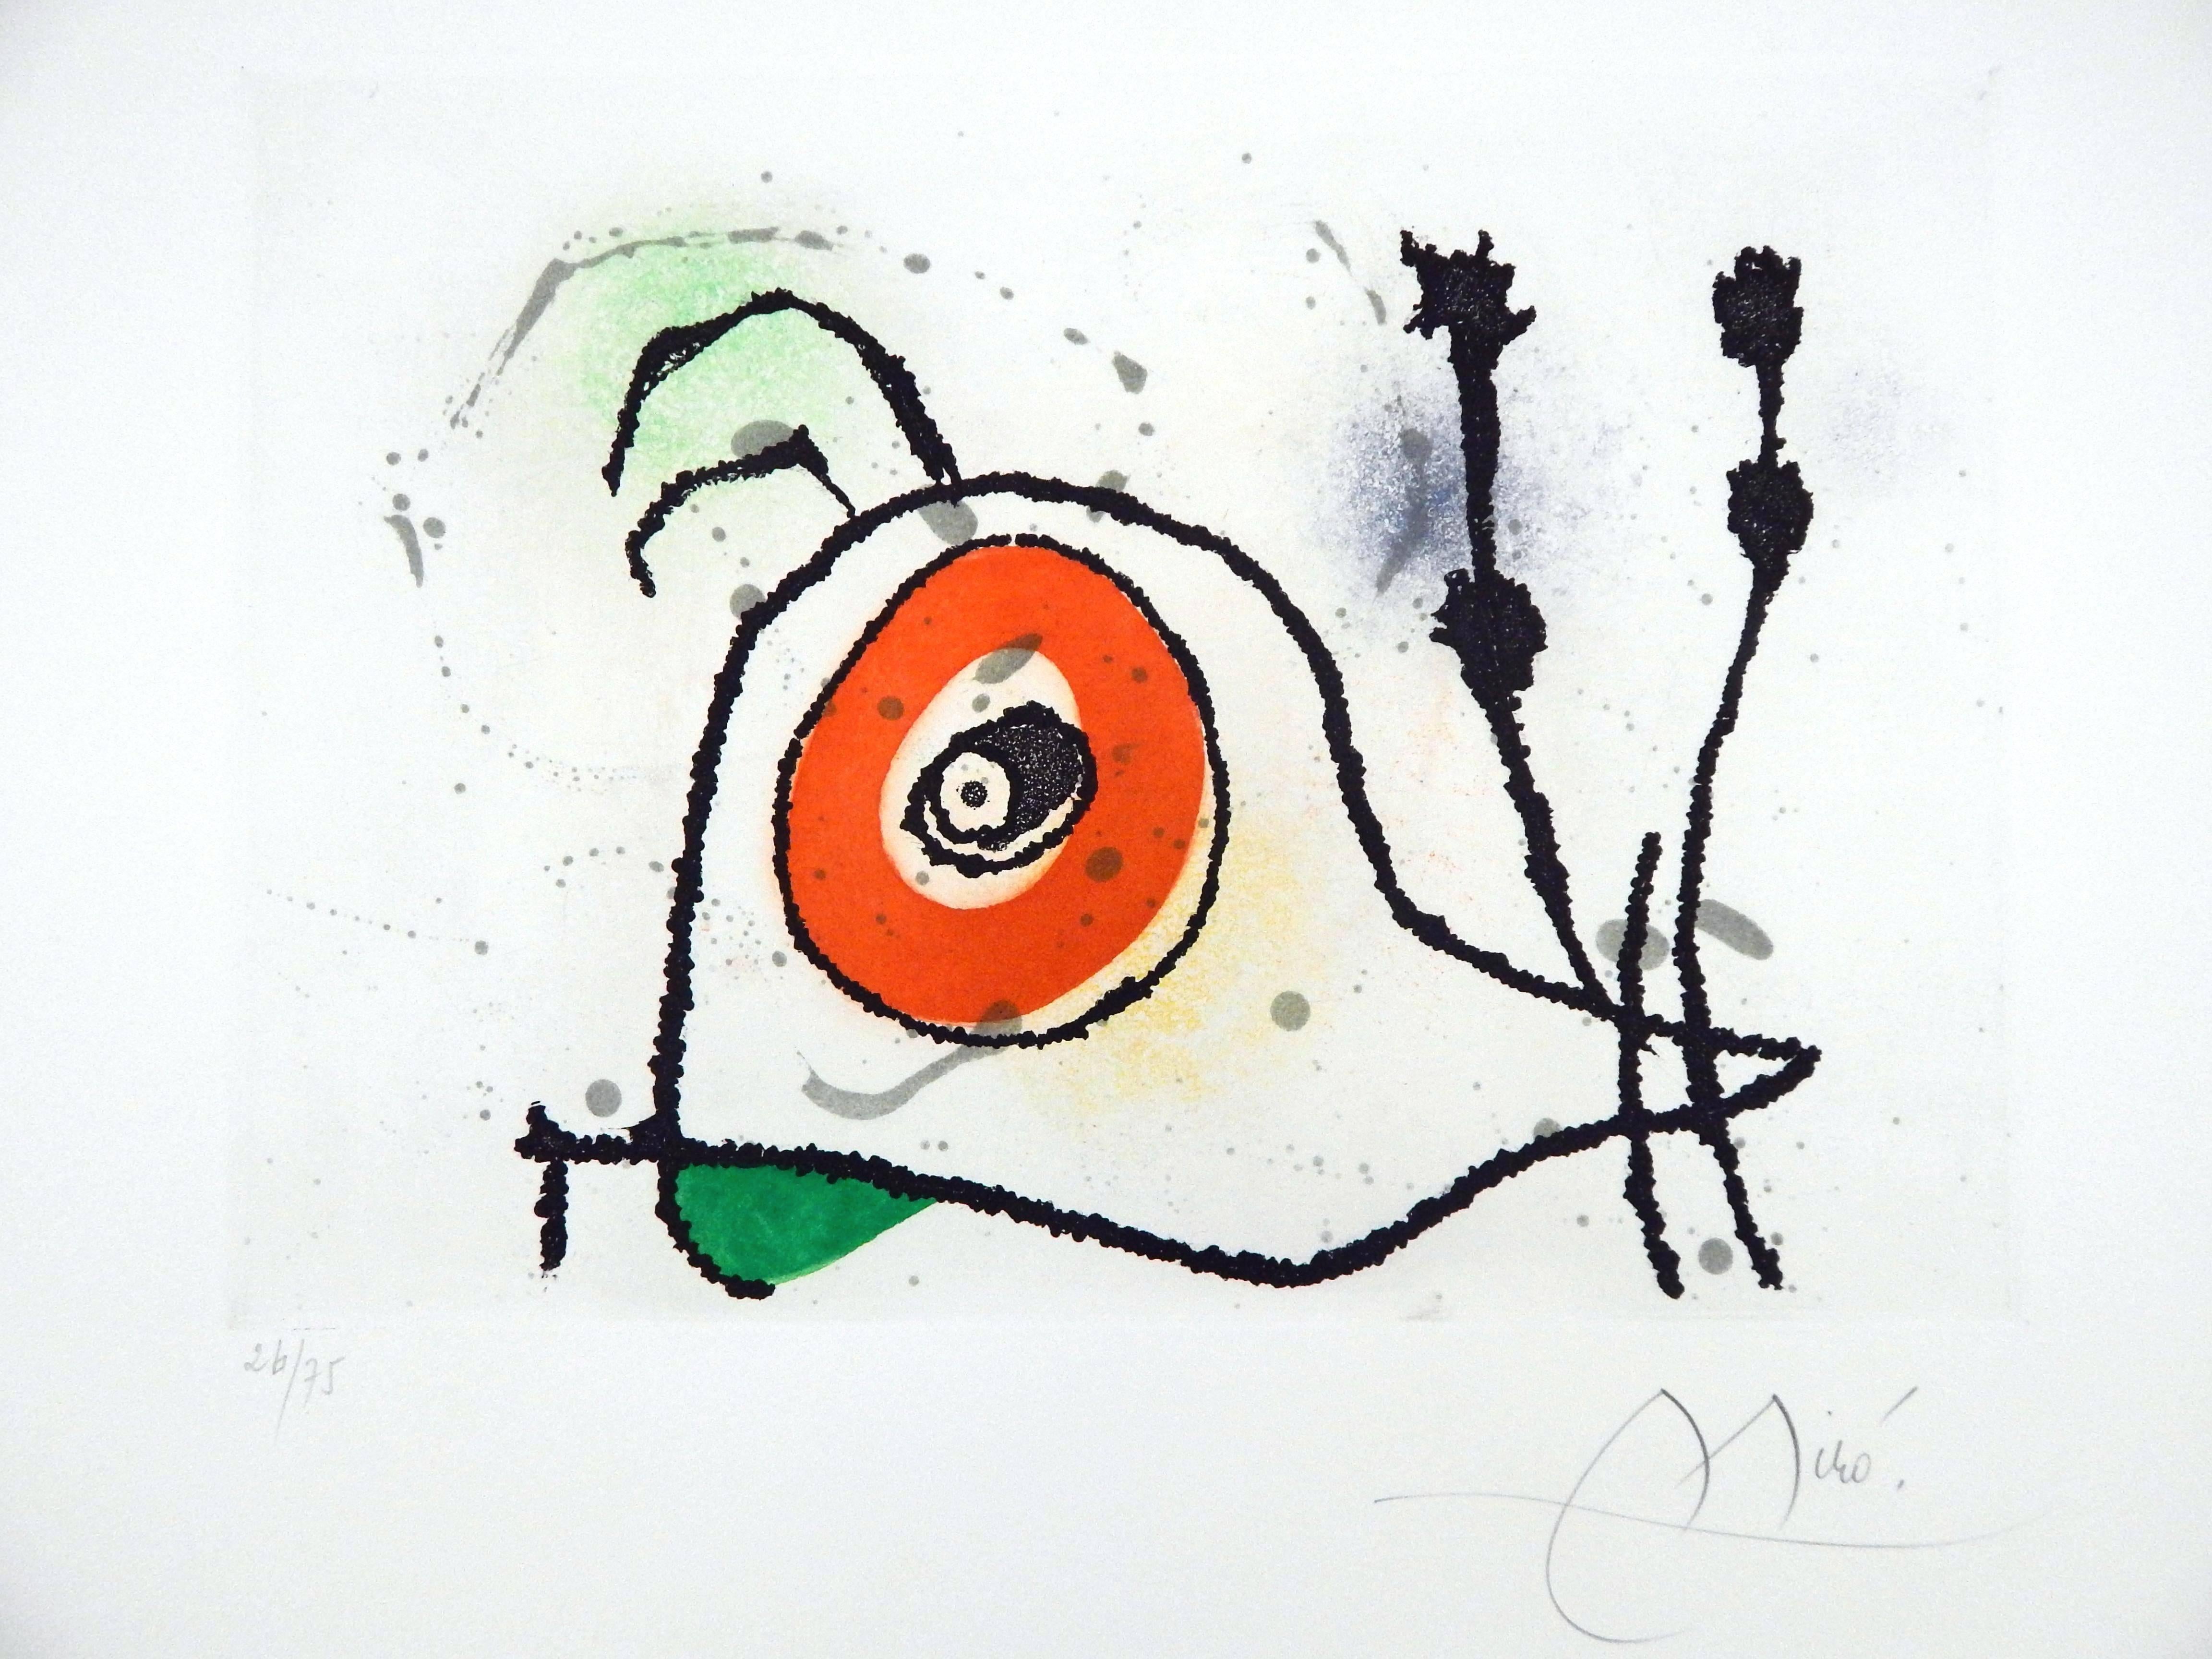 Joan Miro (1893-1983)
